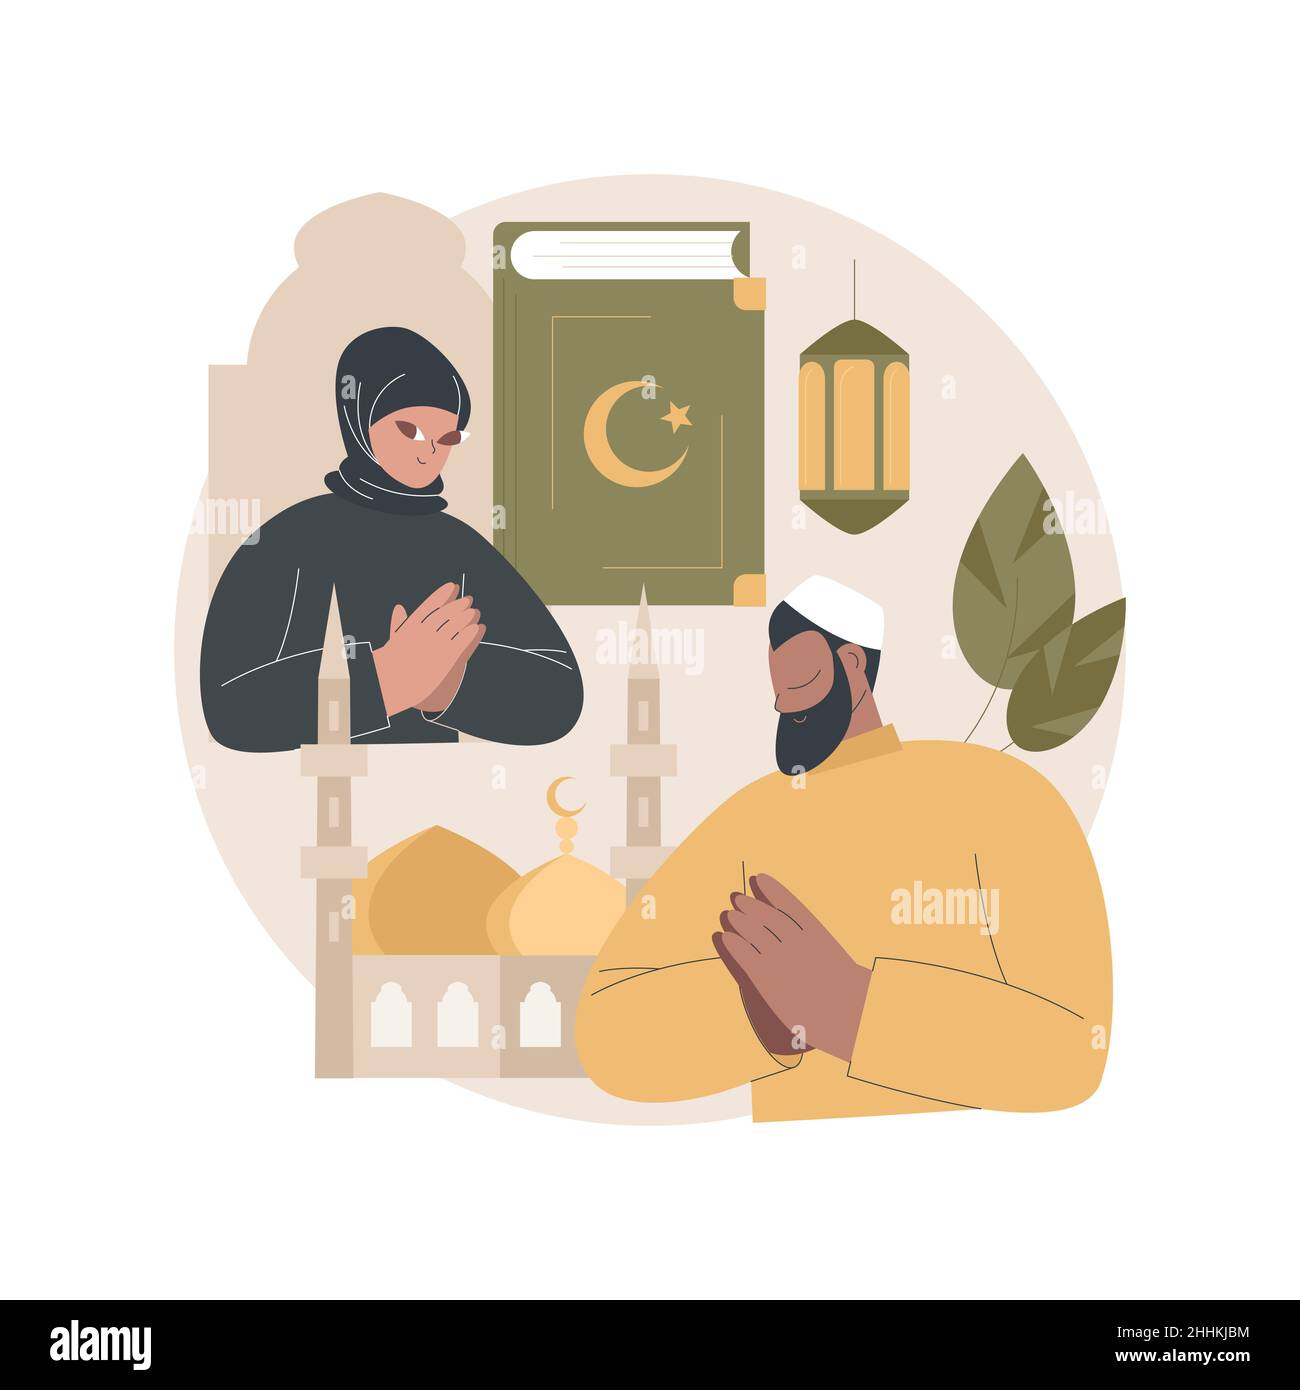 Islam abstract concept vector illustration. Abrahamic monotheistic religion, prophet muhammad, muslim people prays, mosque, ramadan mubarak, ramazan, holy book quran, god allah abstract metaphor. Stock Vector